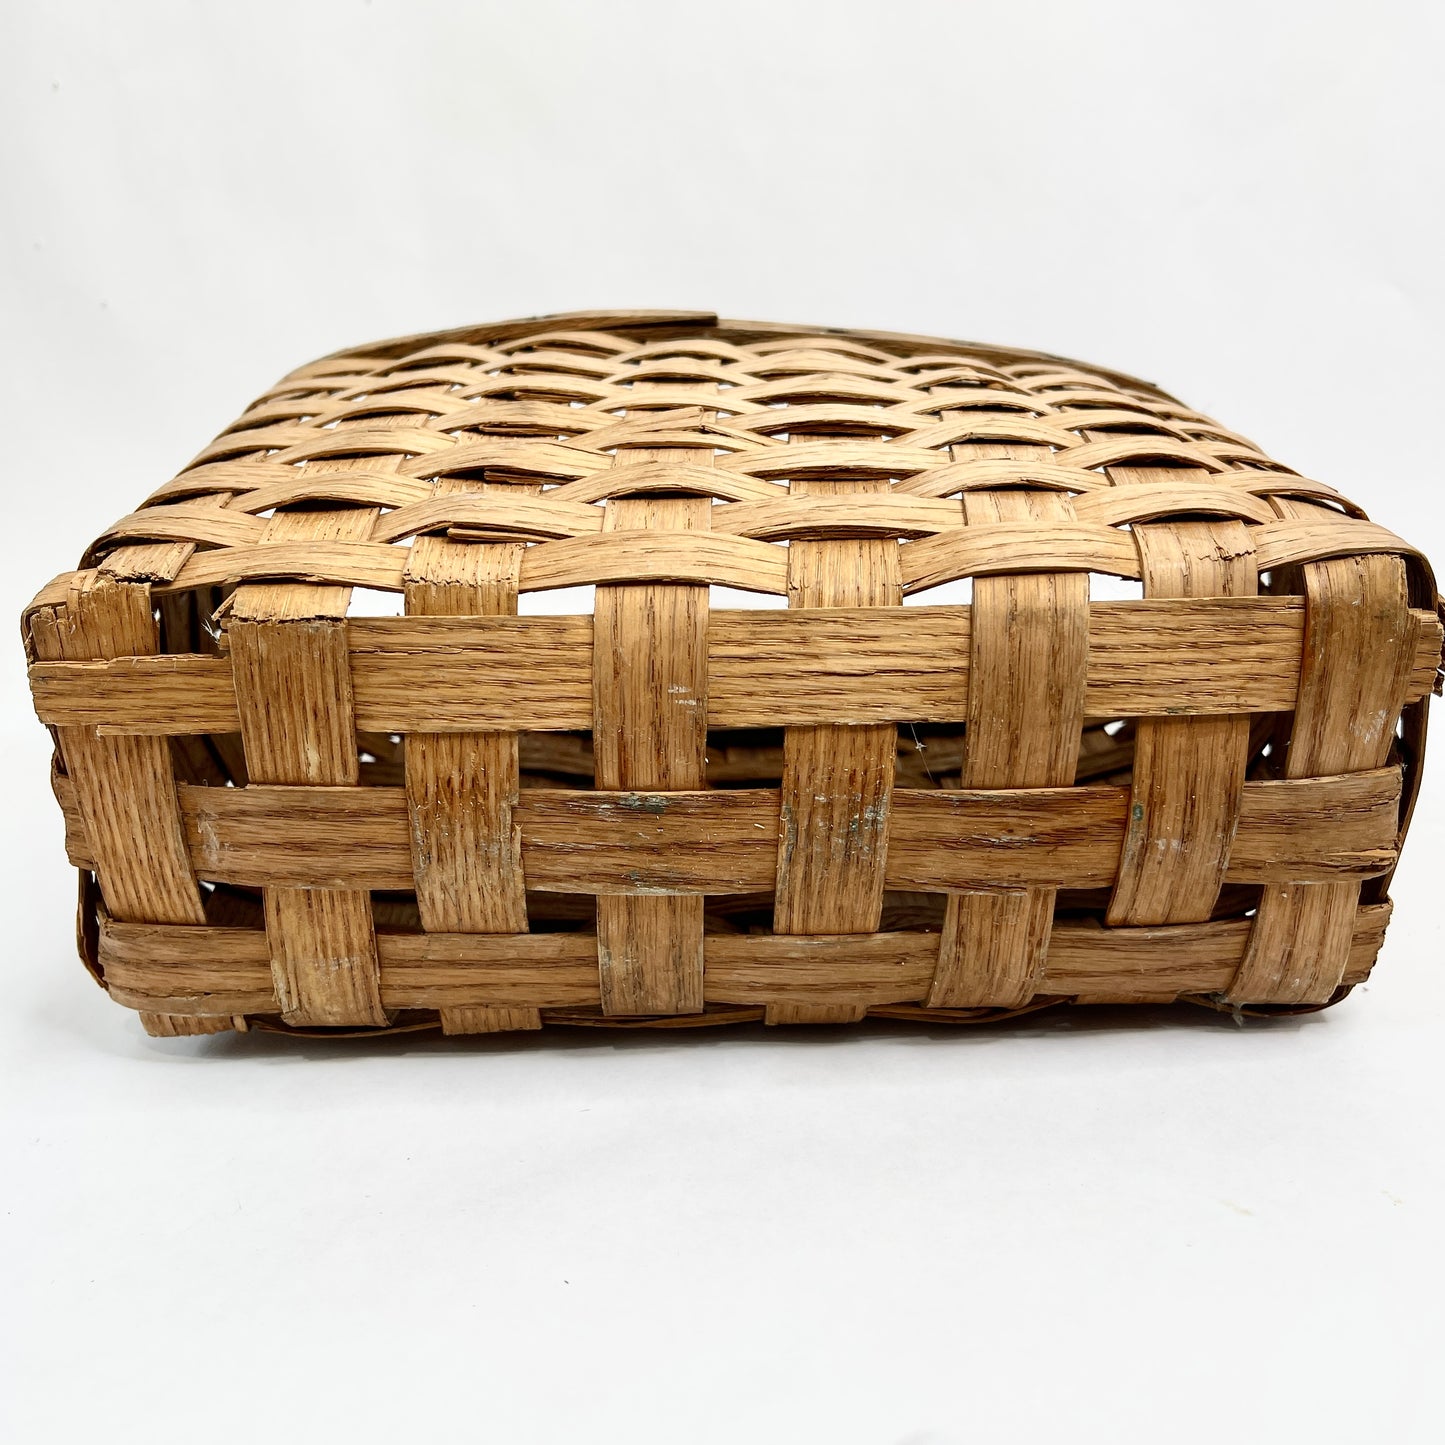 Antique Mail Basket RARE